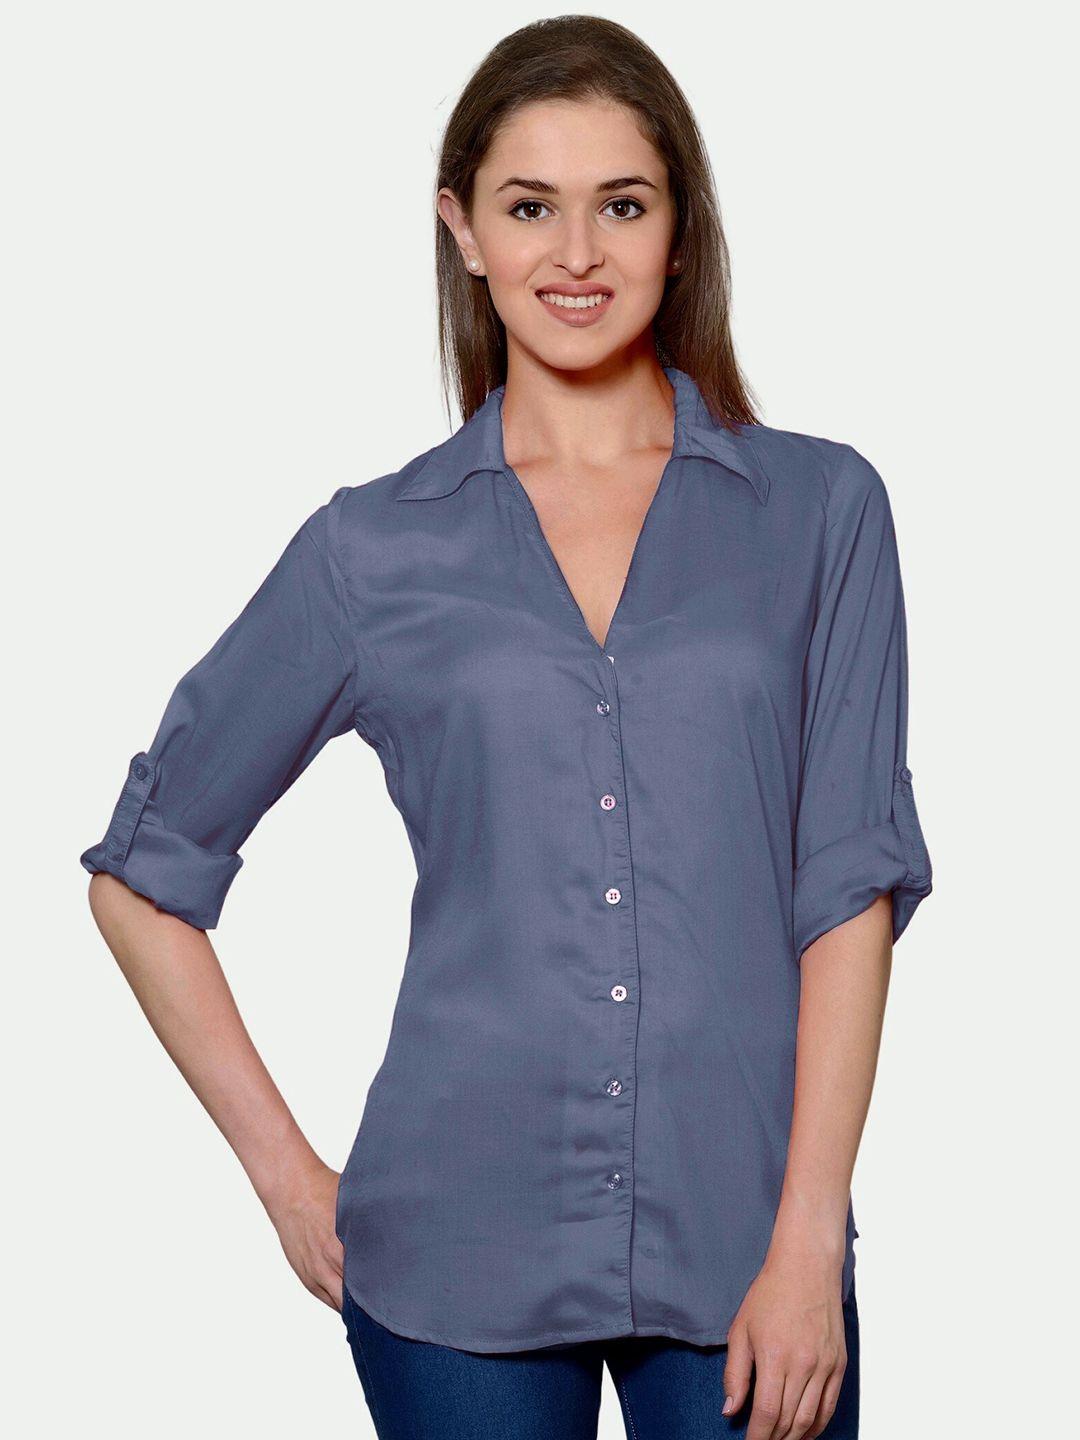 patrorna-women-grey-comfort-casual-shirt